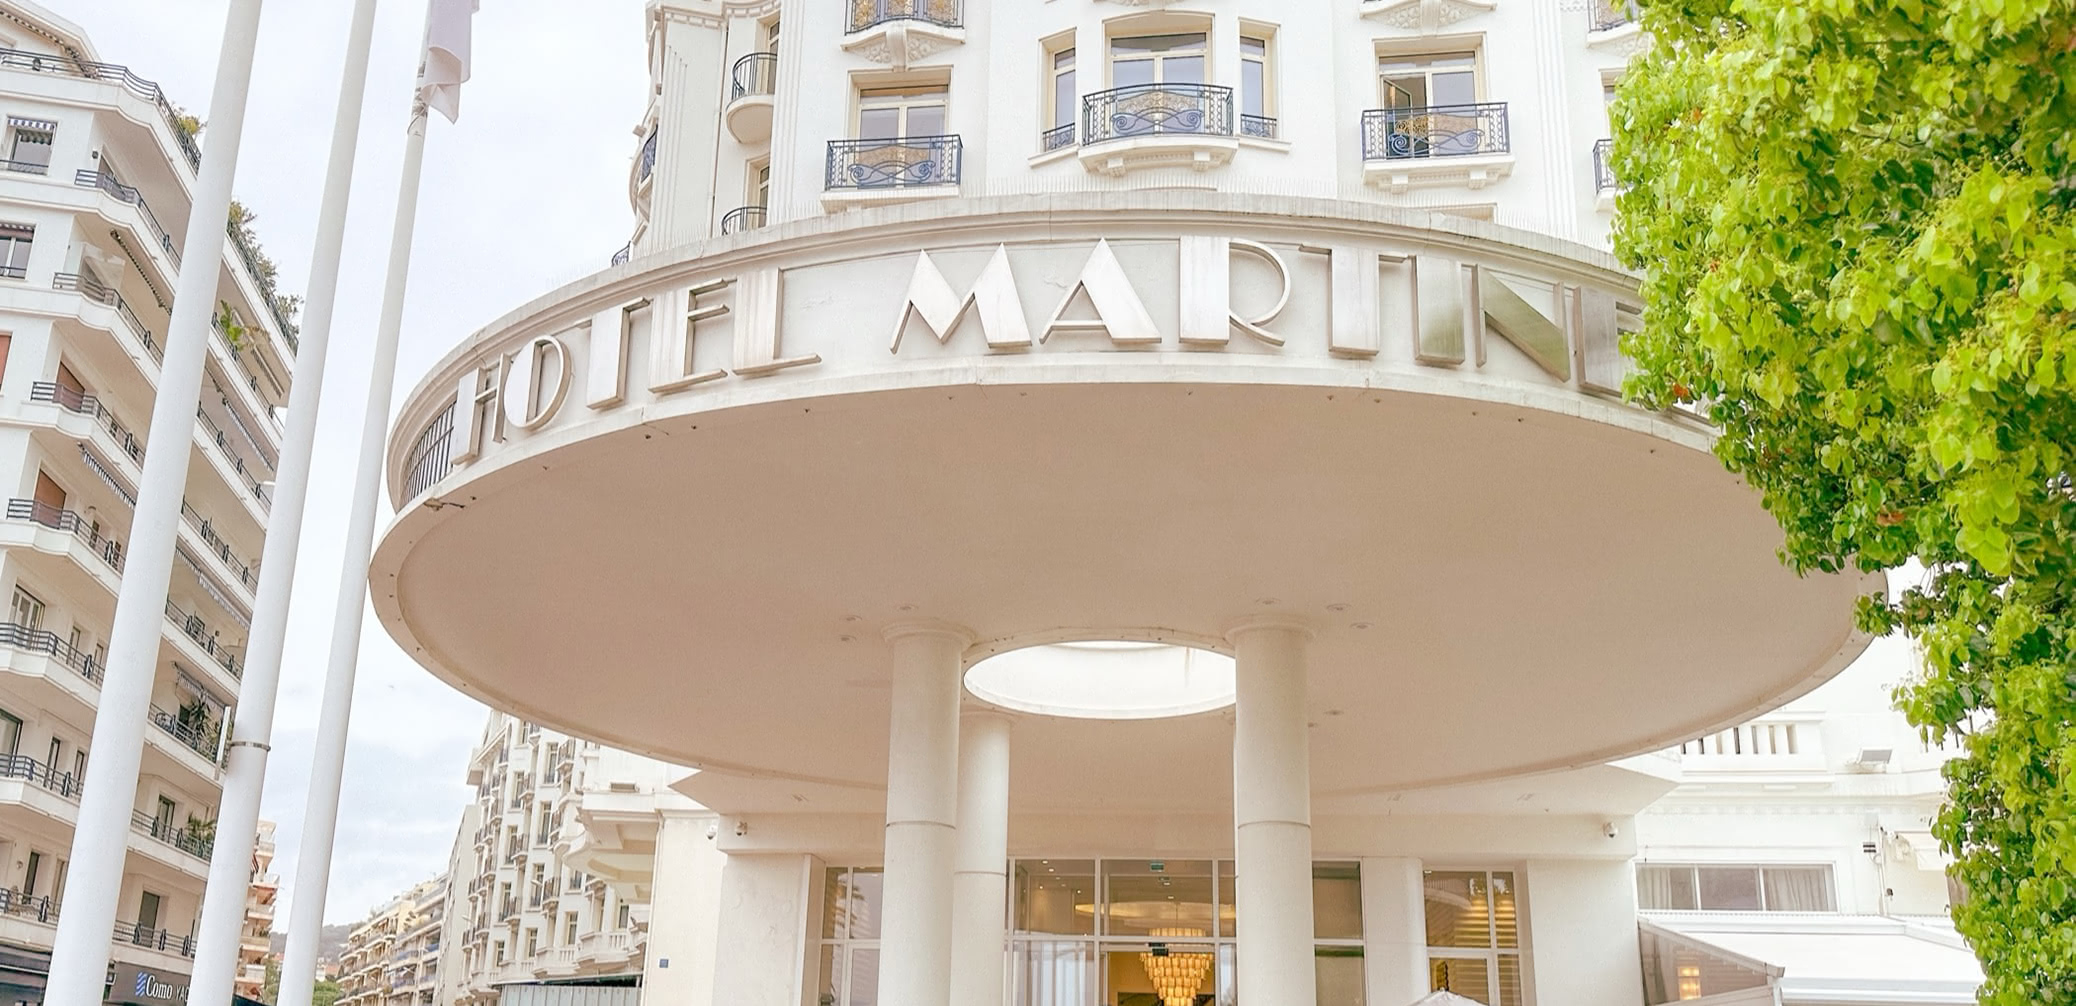 Review: Hotel Martinez Cannes by Hyatt